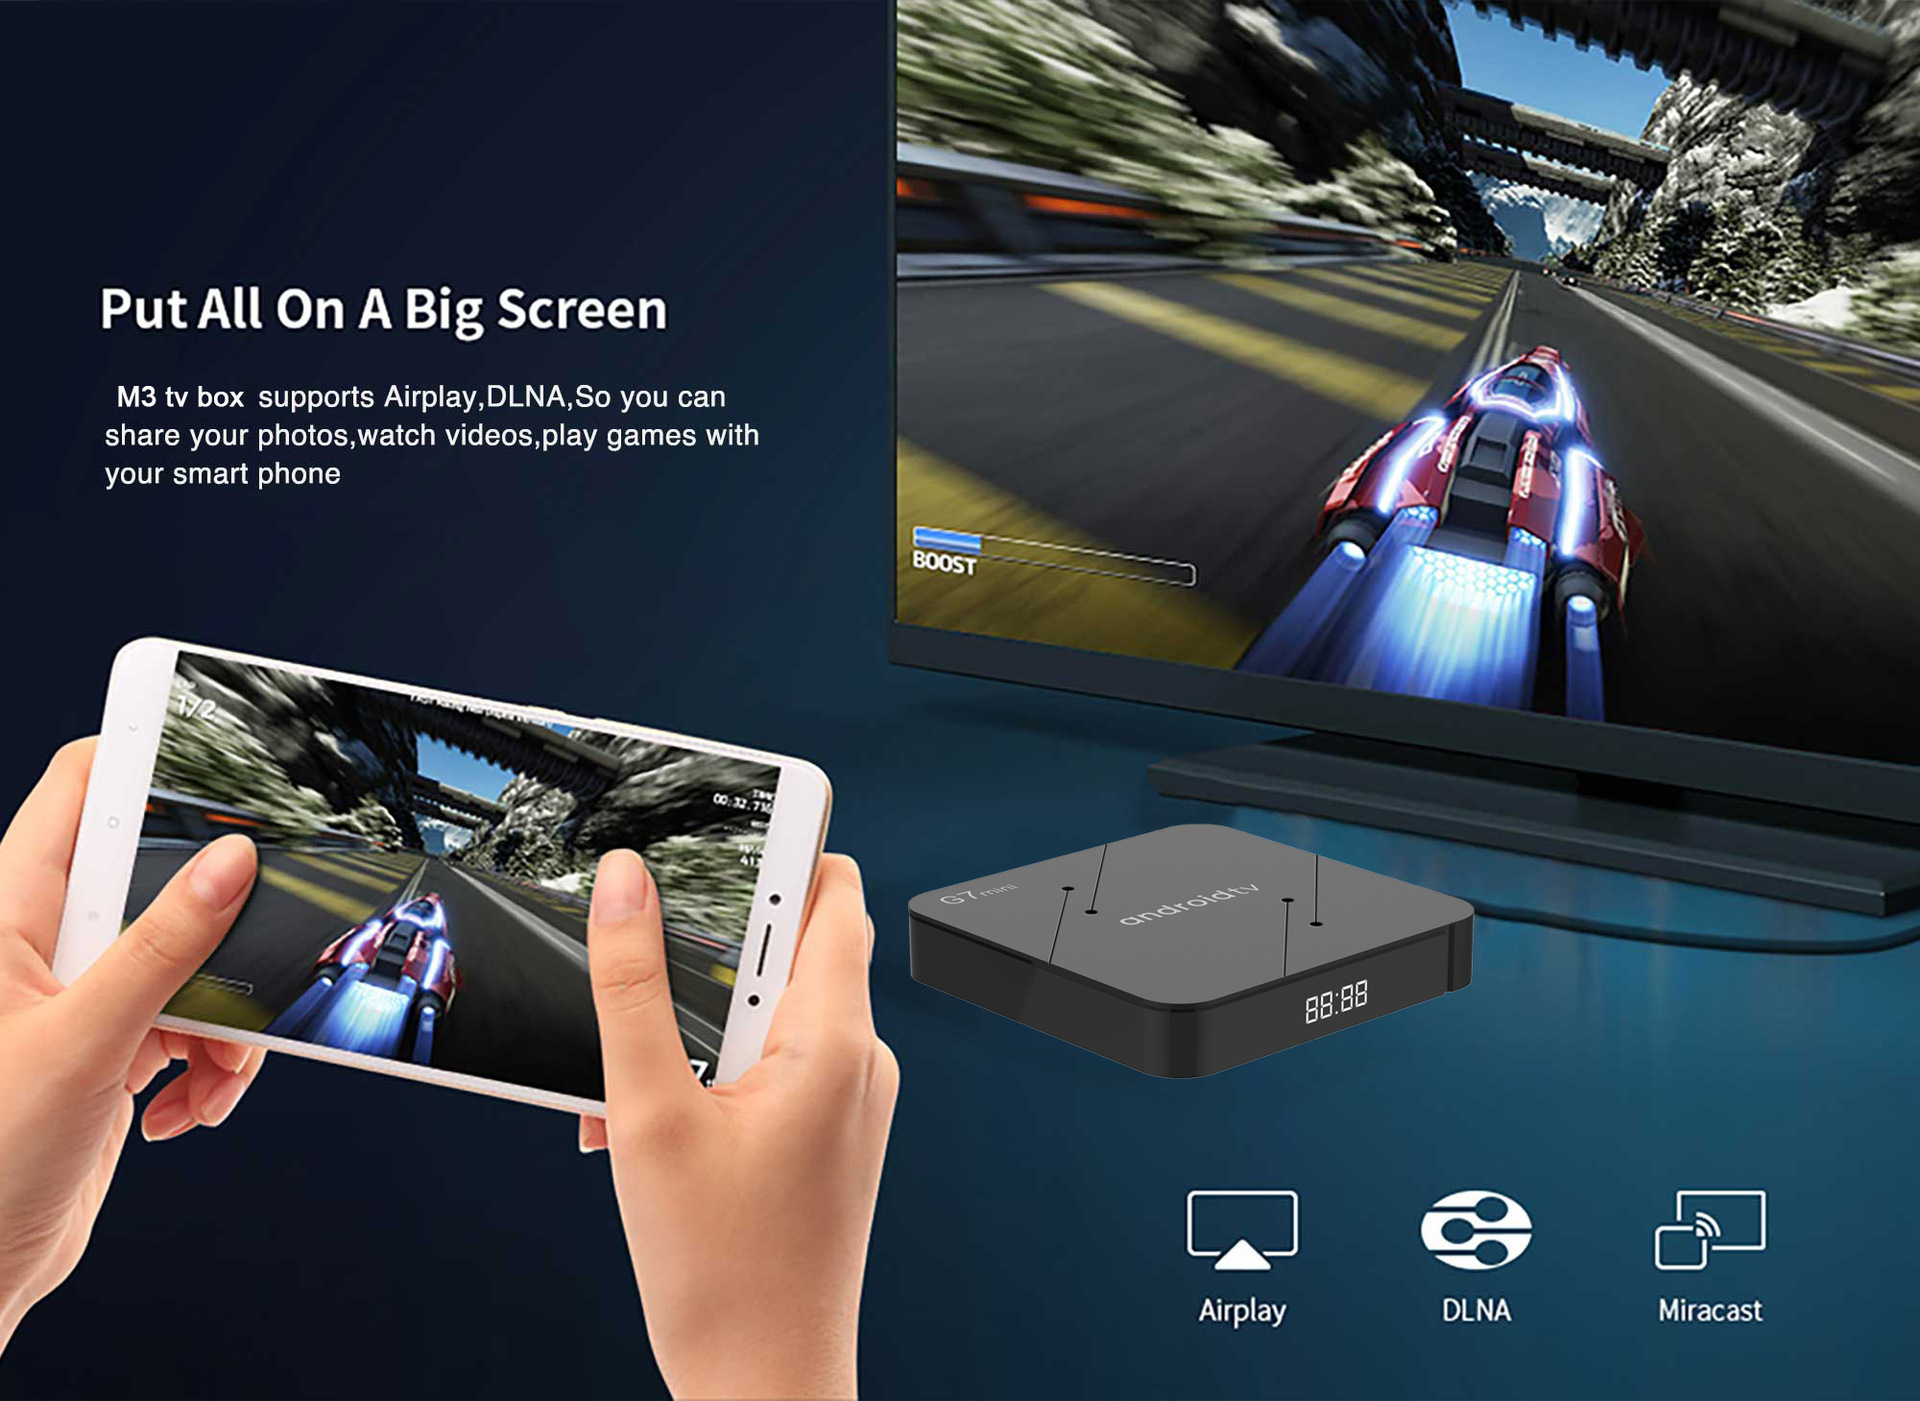 G7mini Android 11 System Dual Band WIFI Bluetooth 5.0 5G-WIFI 2+16G TV Box Set Top Box